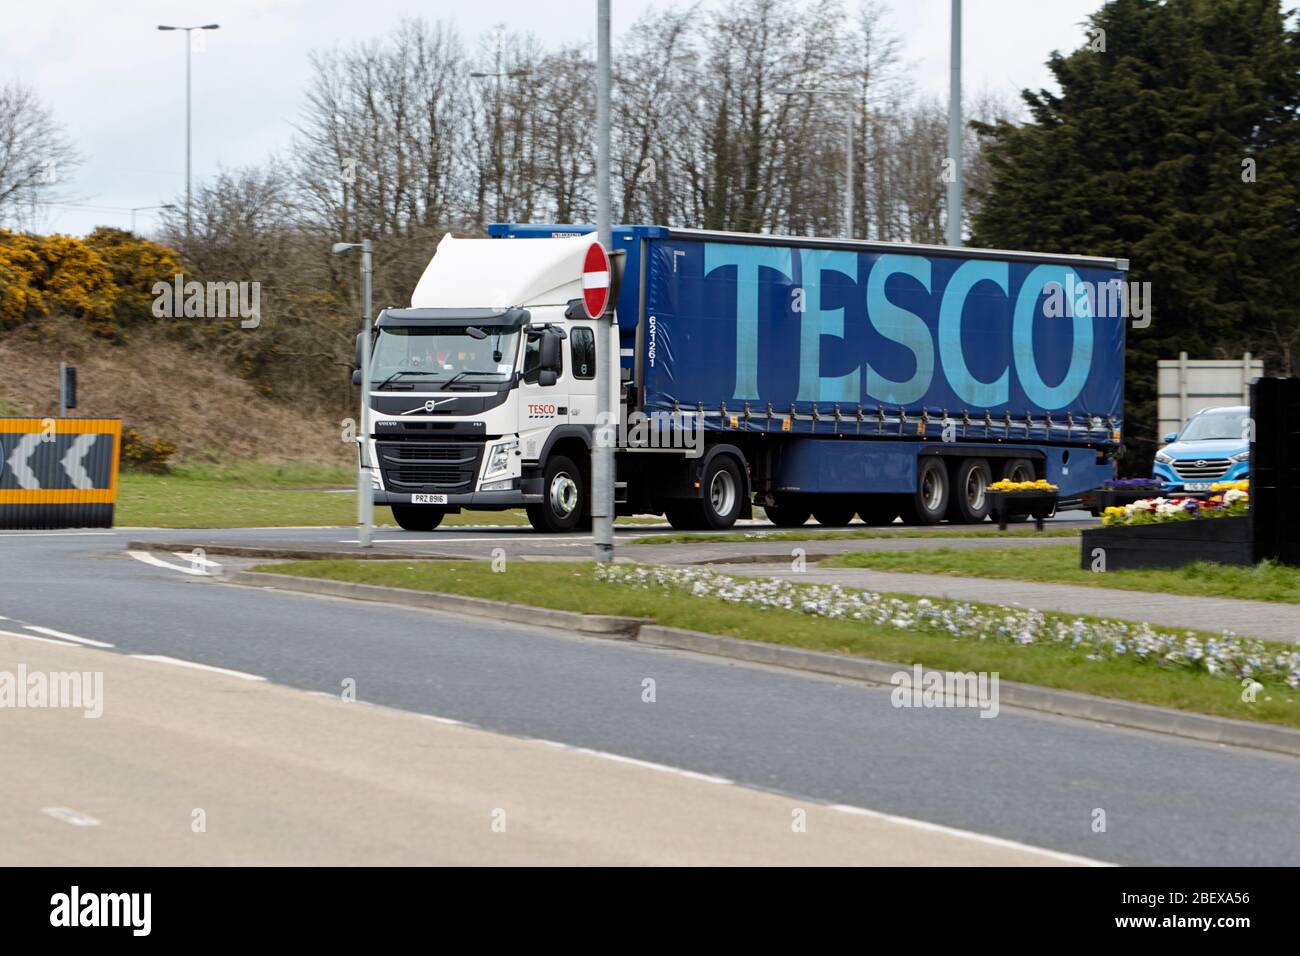 tesco supermarket distribution truck during coronavirus lockdown in Newtownabbey Northern Ireland UK Stock Photo